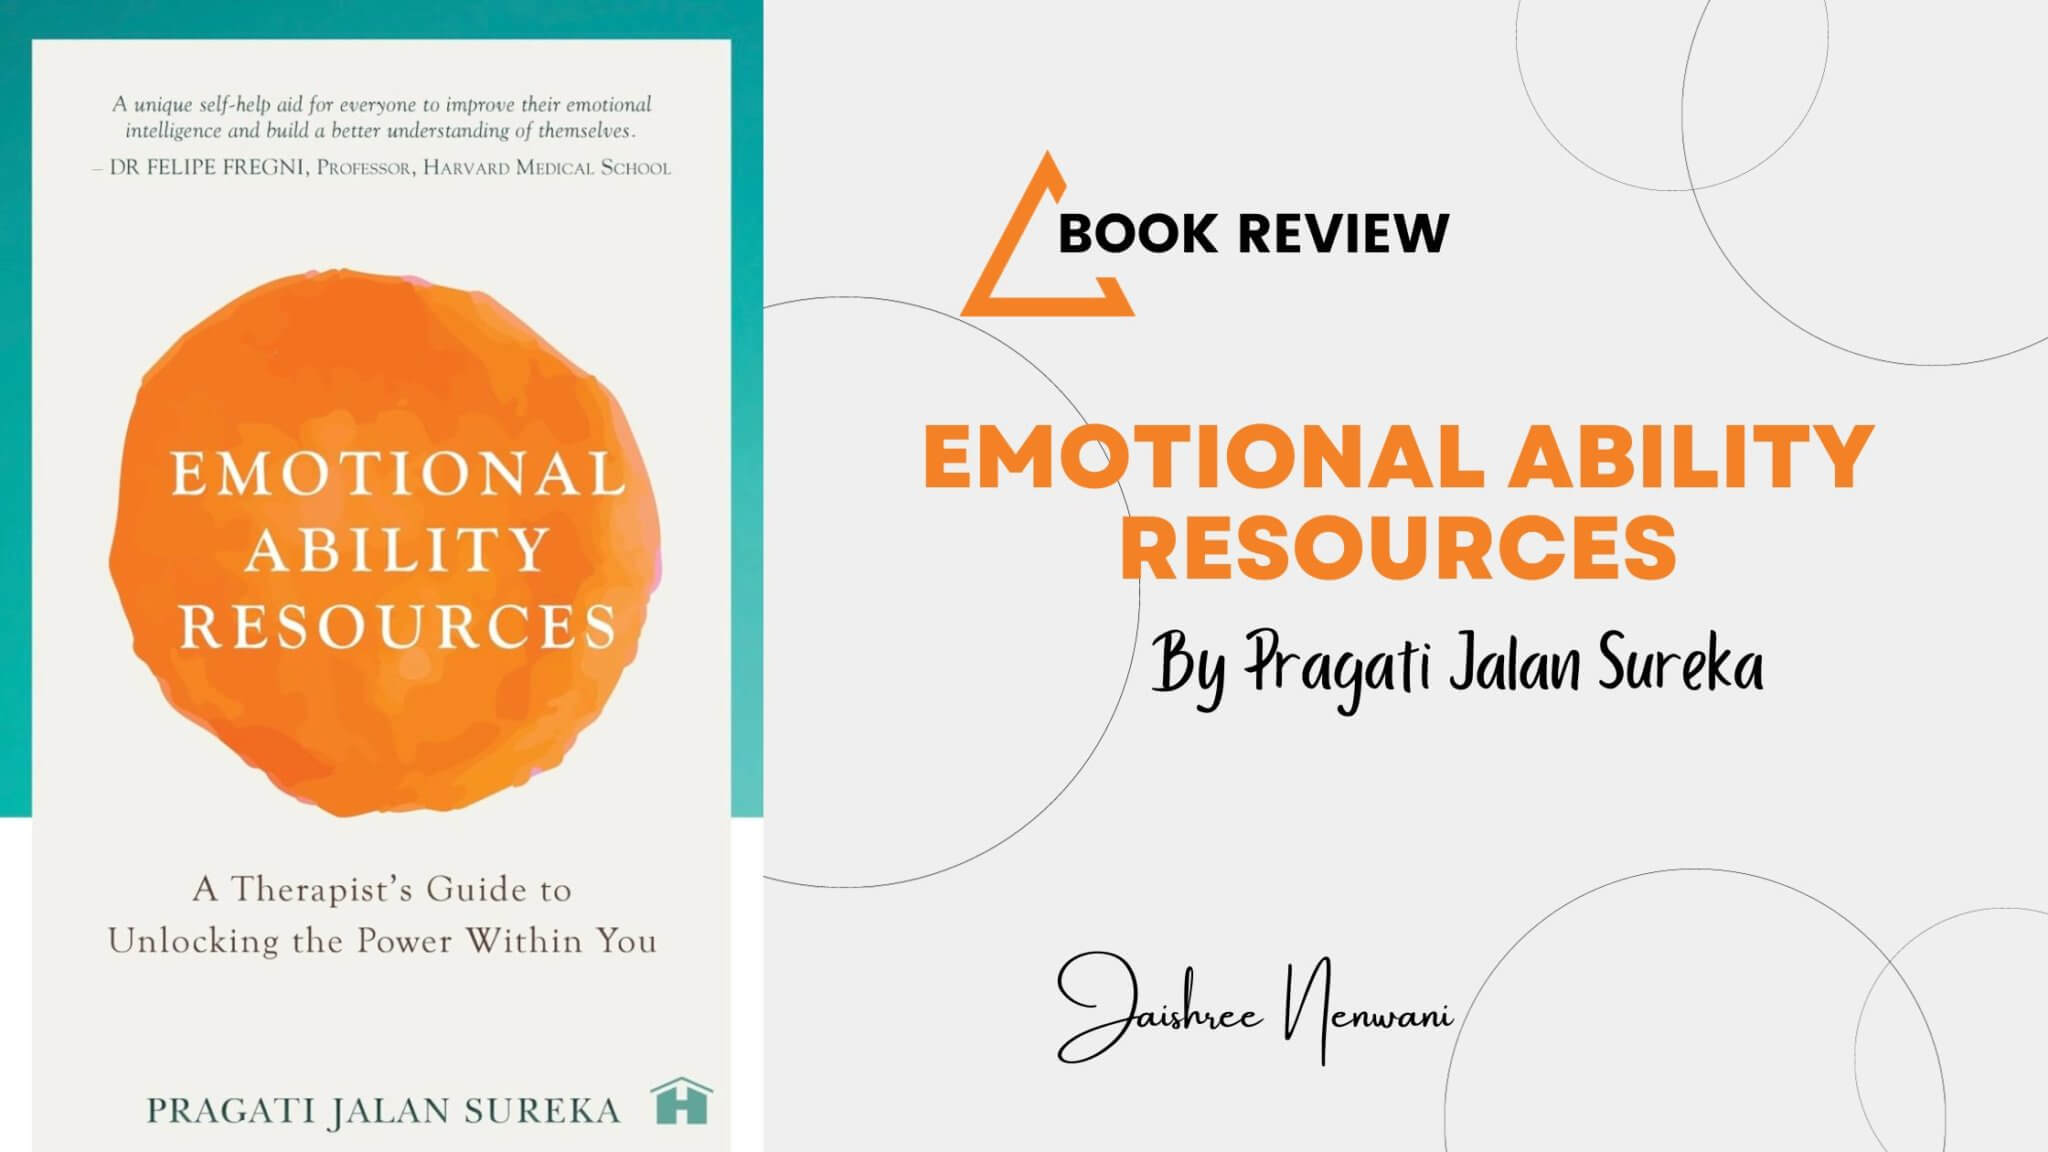 Emotional Ability Resources by Pragati Jalan Sureka